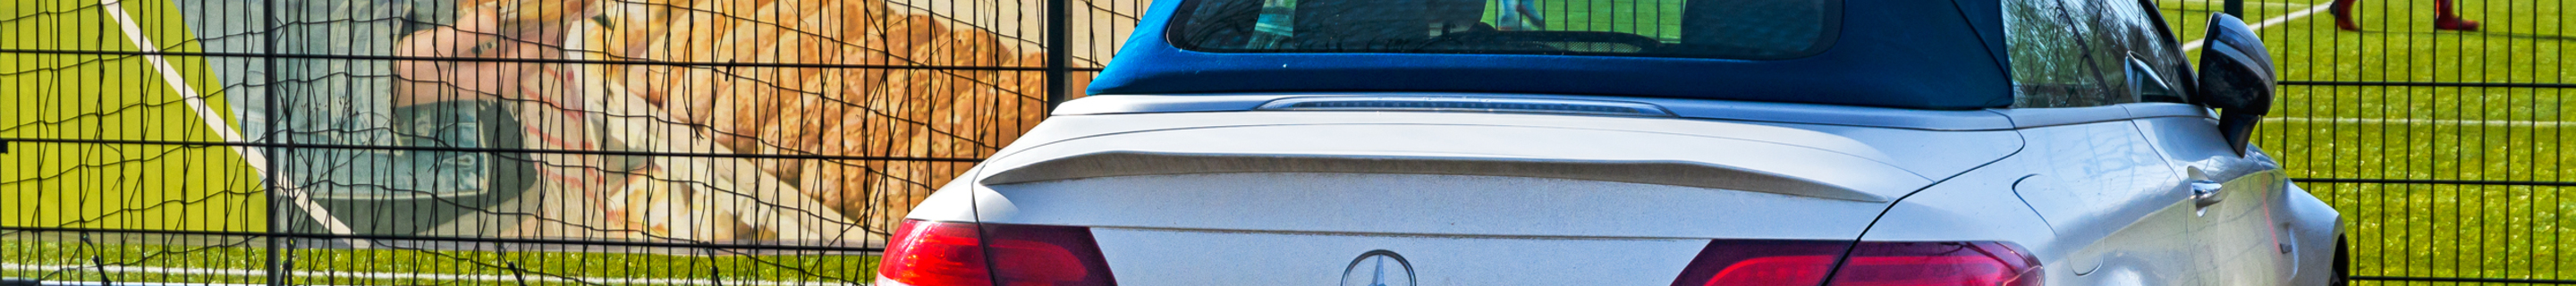 Mercedes-AMG C 63 S Convertible A205 Ocean Blue Edition